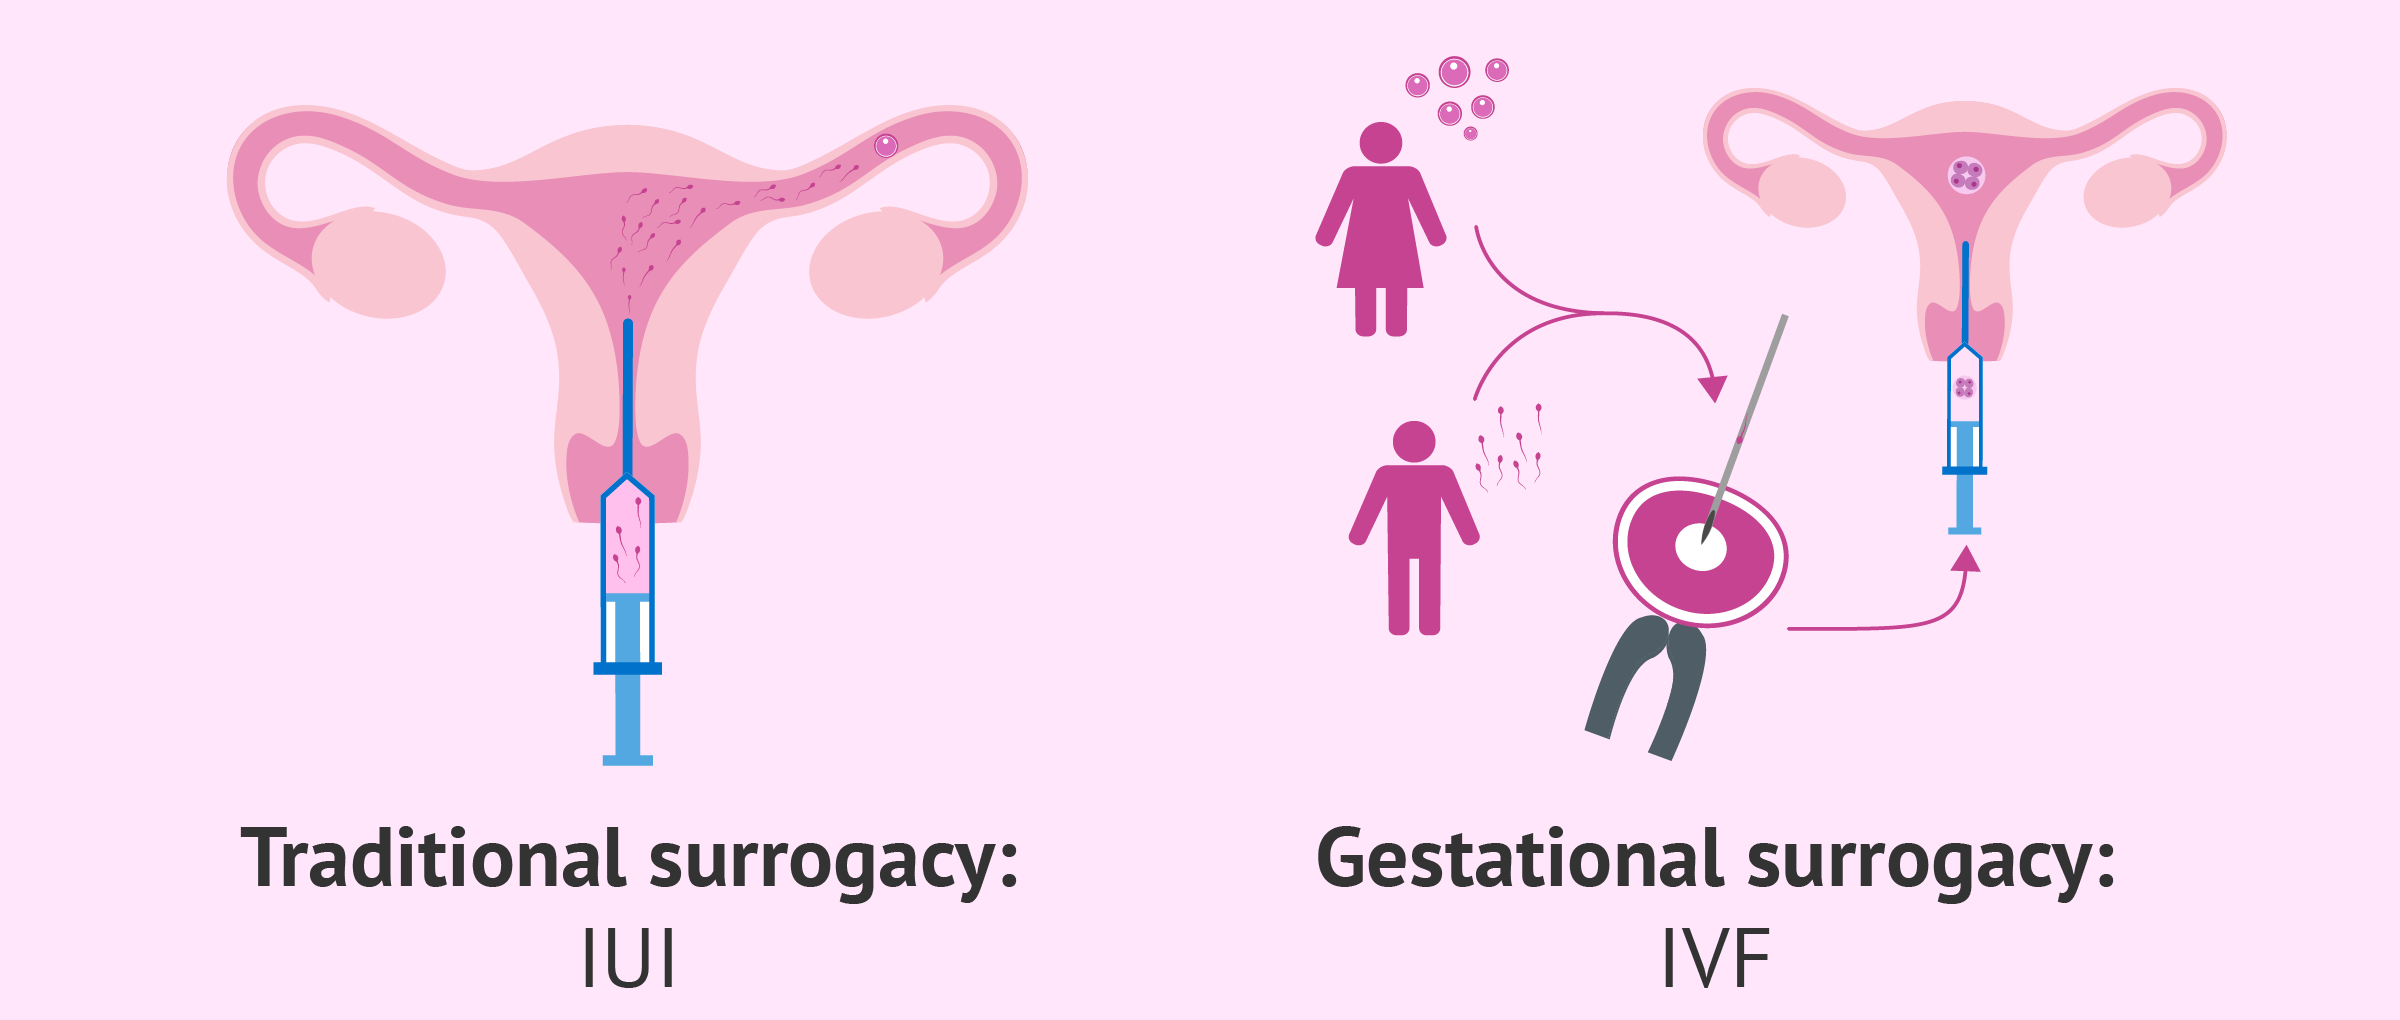 Traditional surrogate vs. gestational surrogate